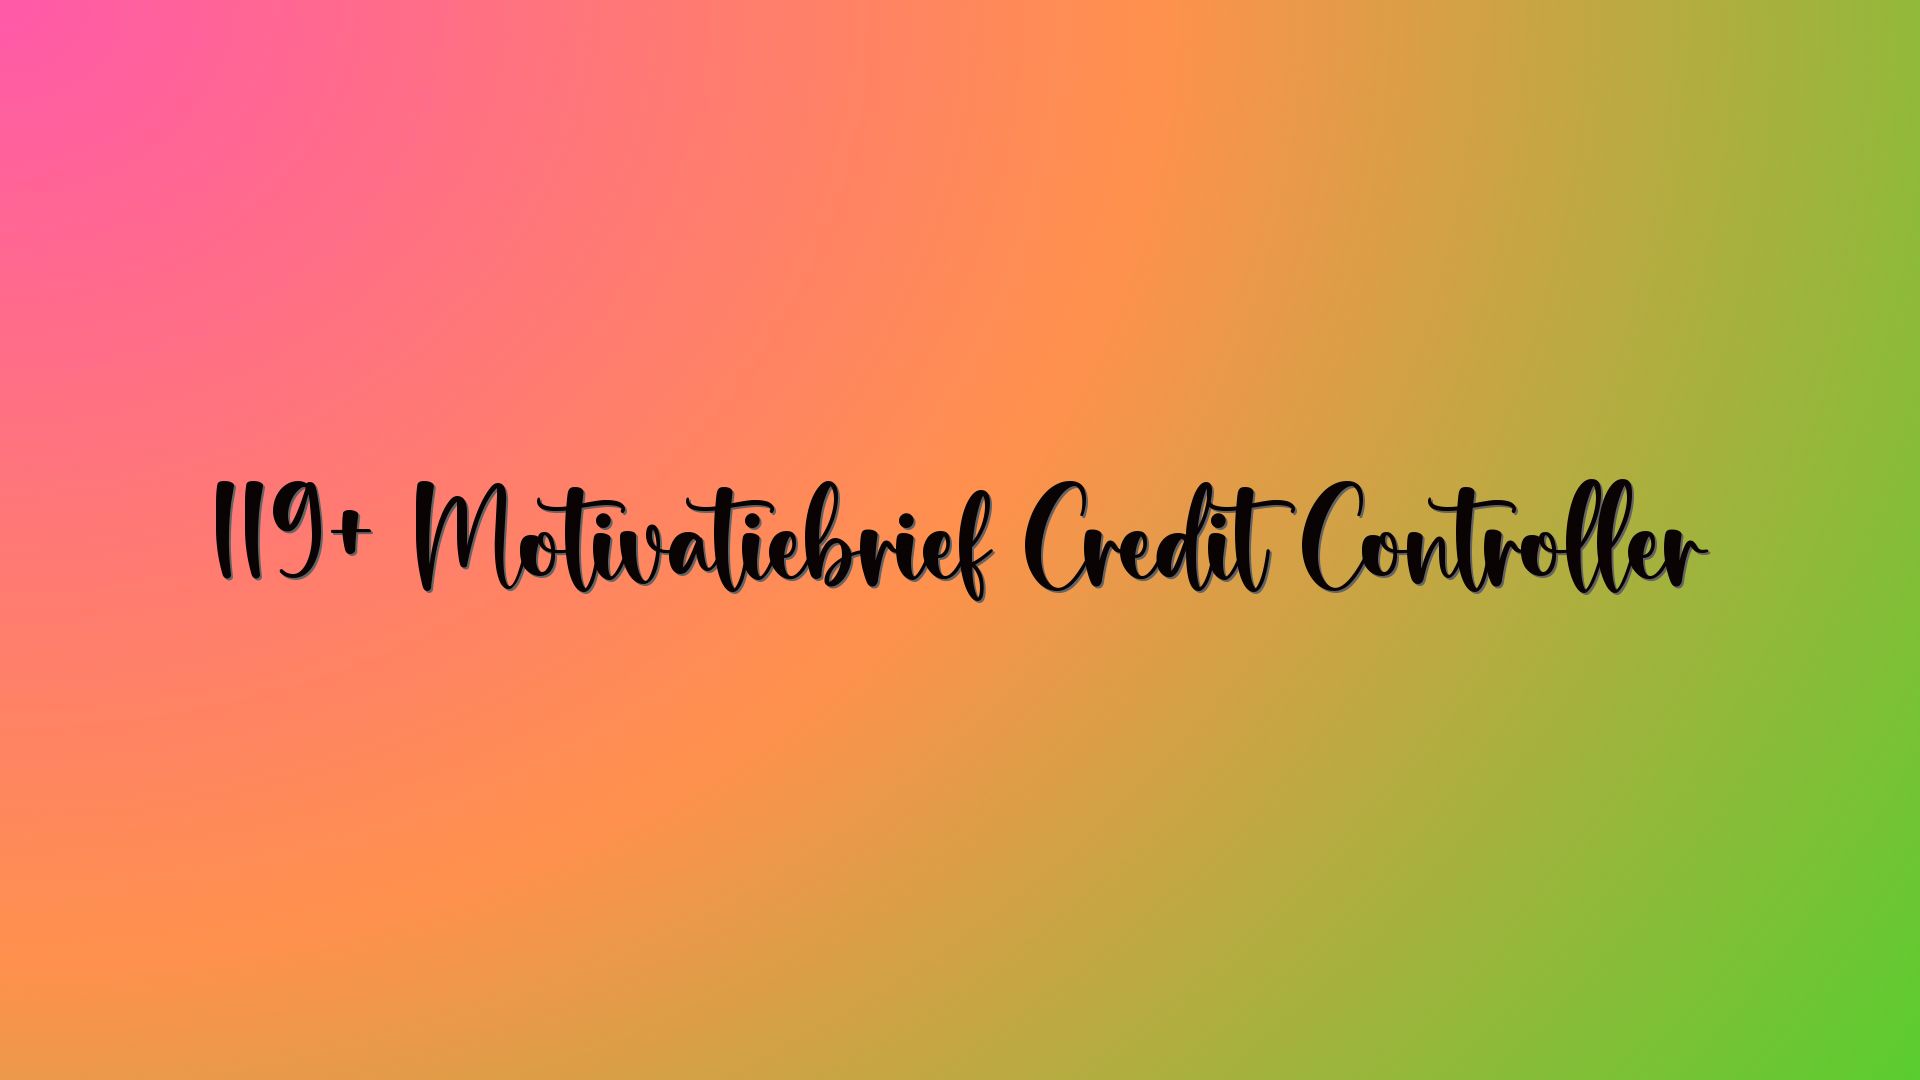 119+ Motivatiebrief Credit Controller